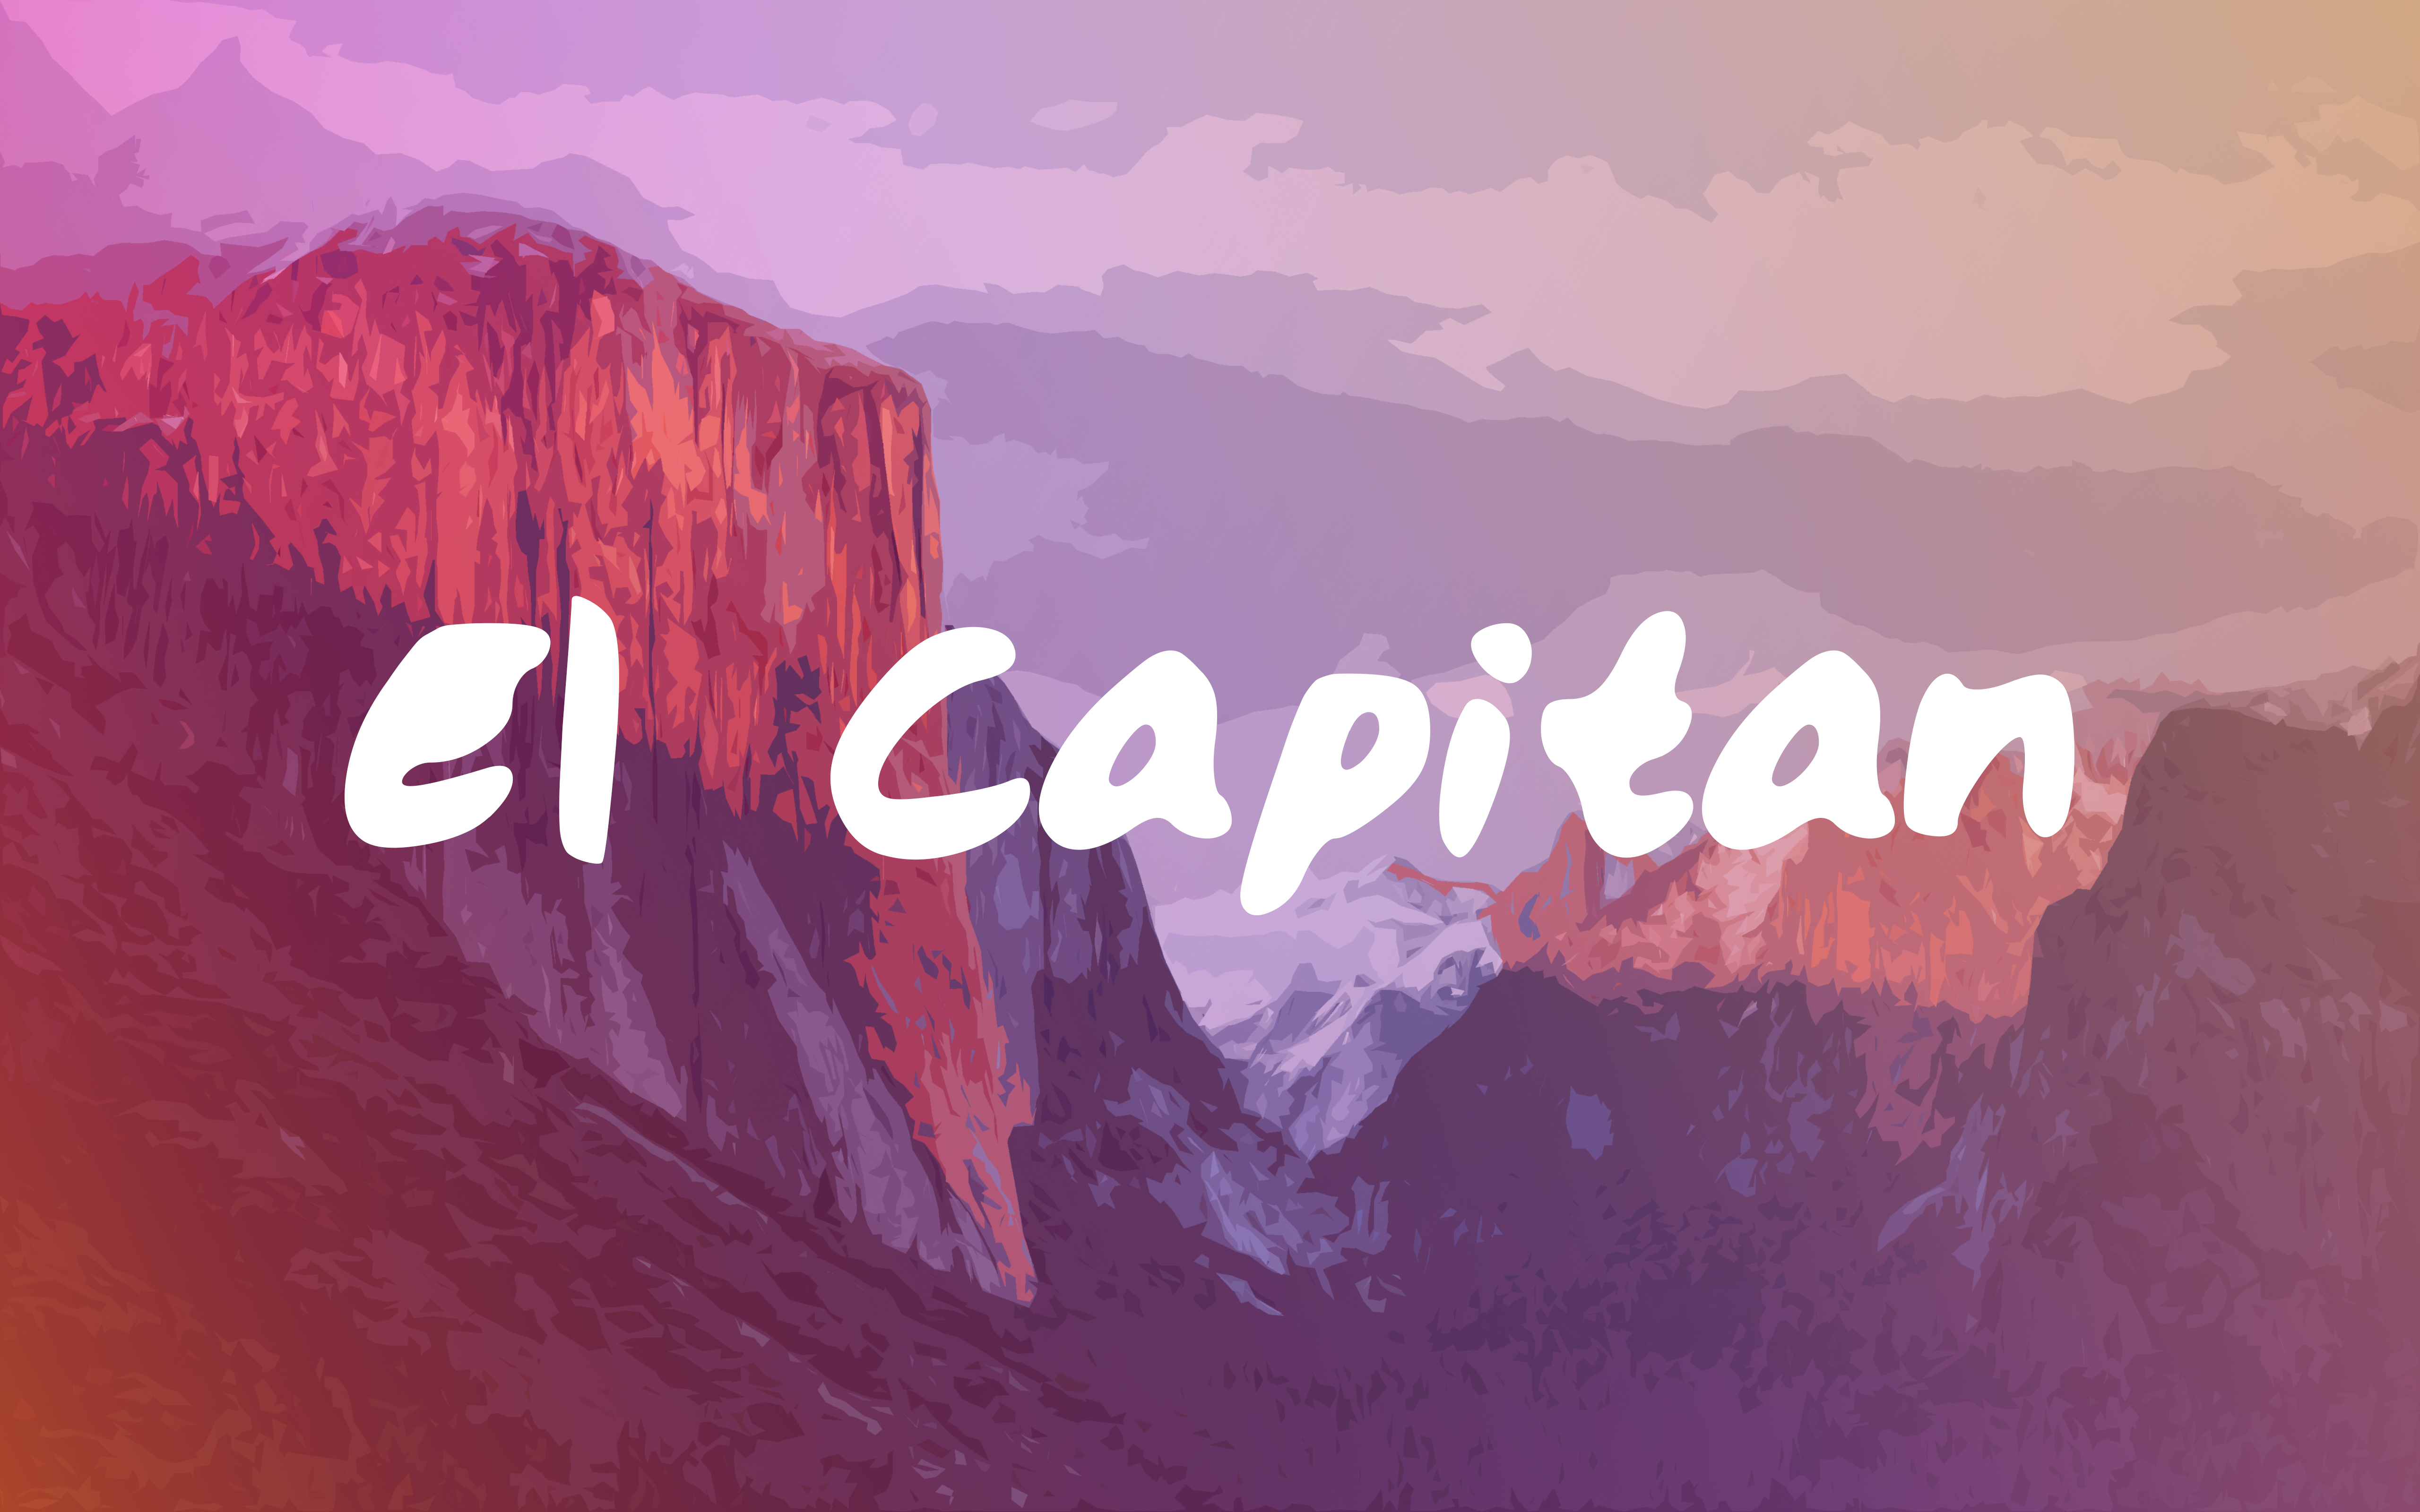 El Capitan Wallpaper (Apple OS X  inspired) by nathannitz on DeviantArt